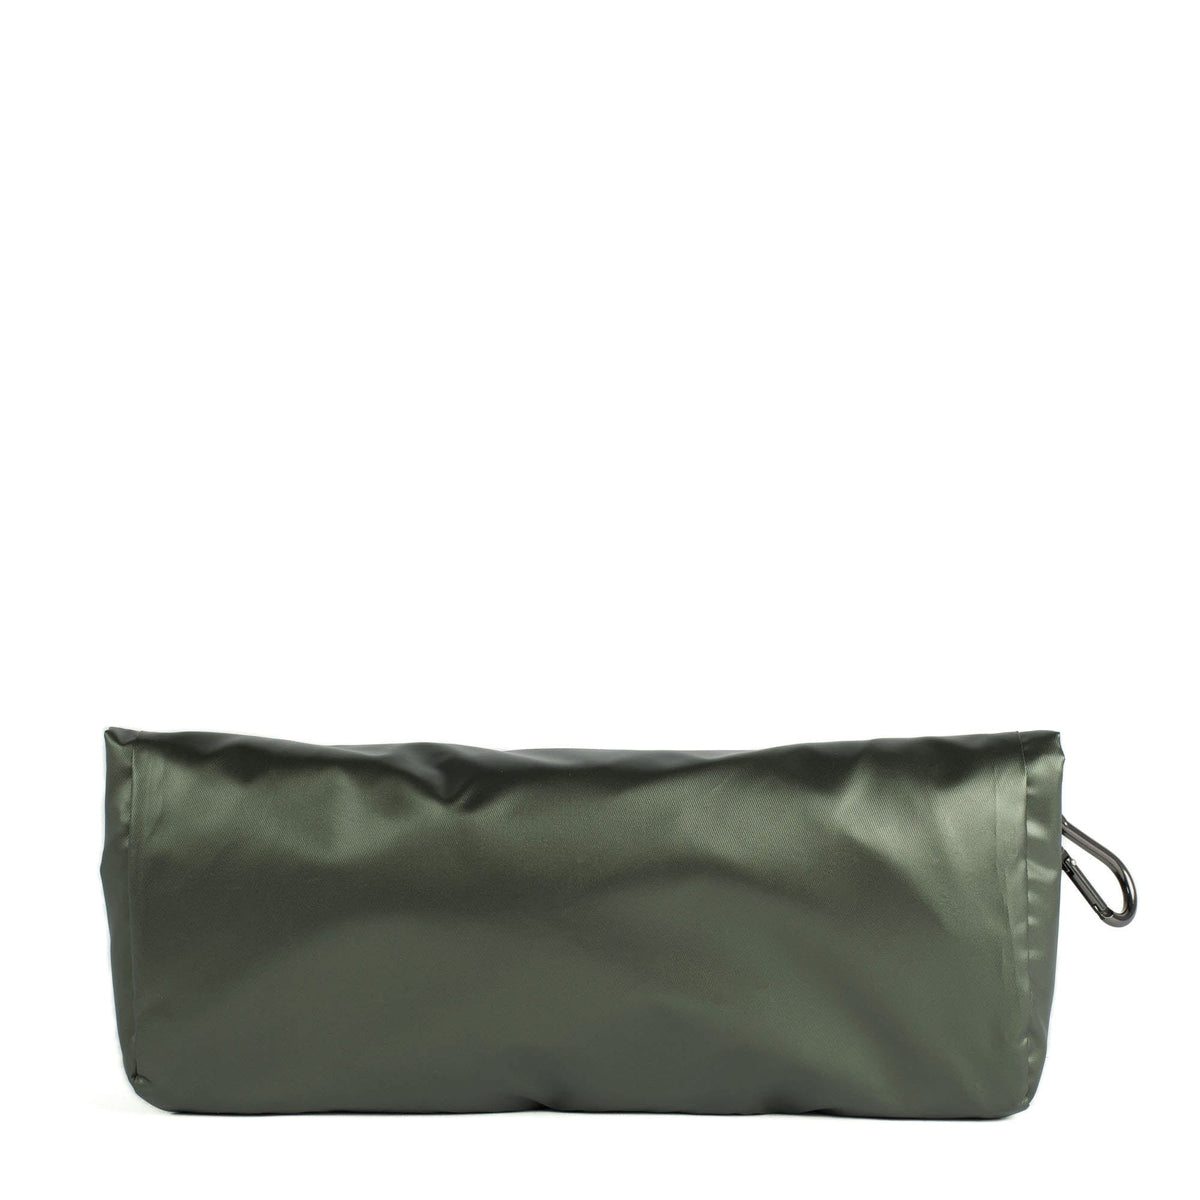 Ranger XL Packable Tote Bag